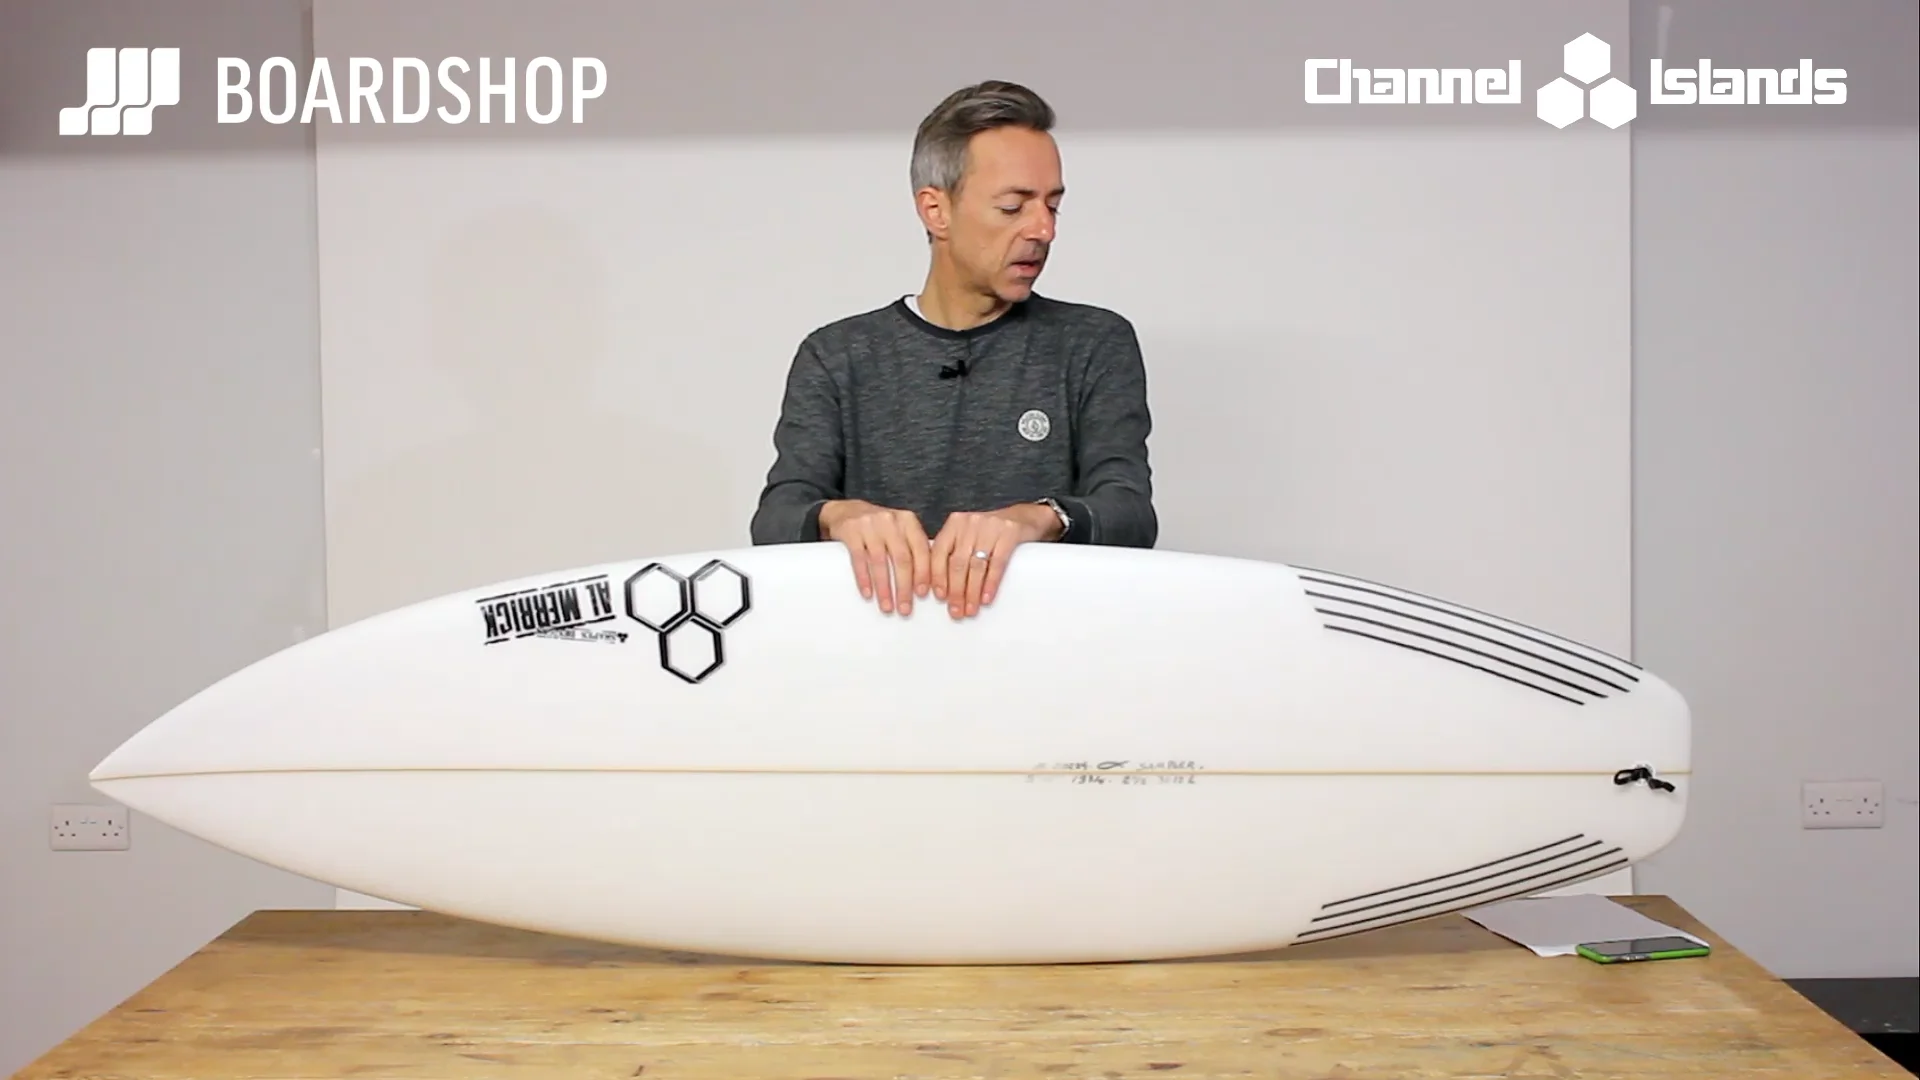 Channel Islands Sampler Surfboard Review